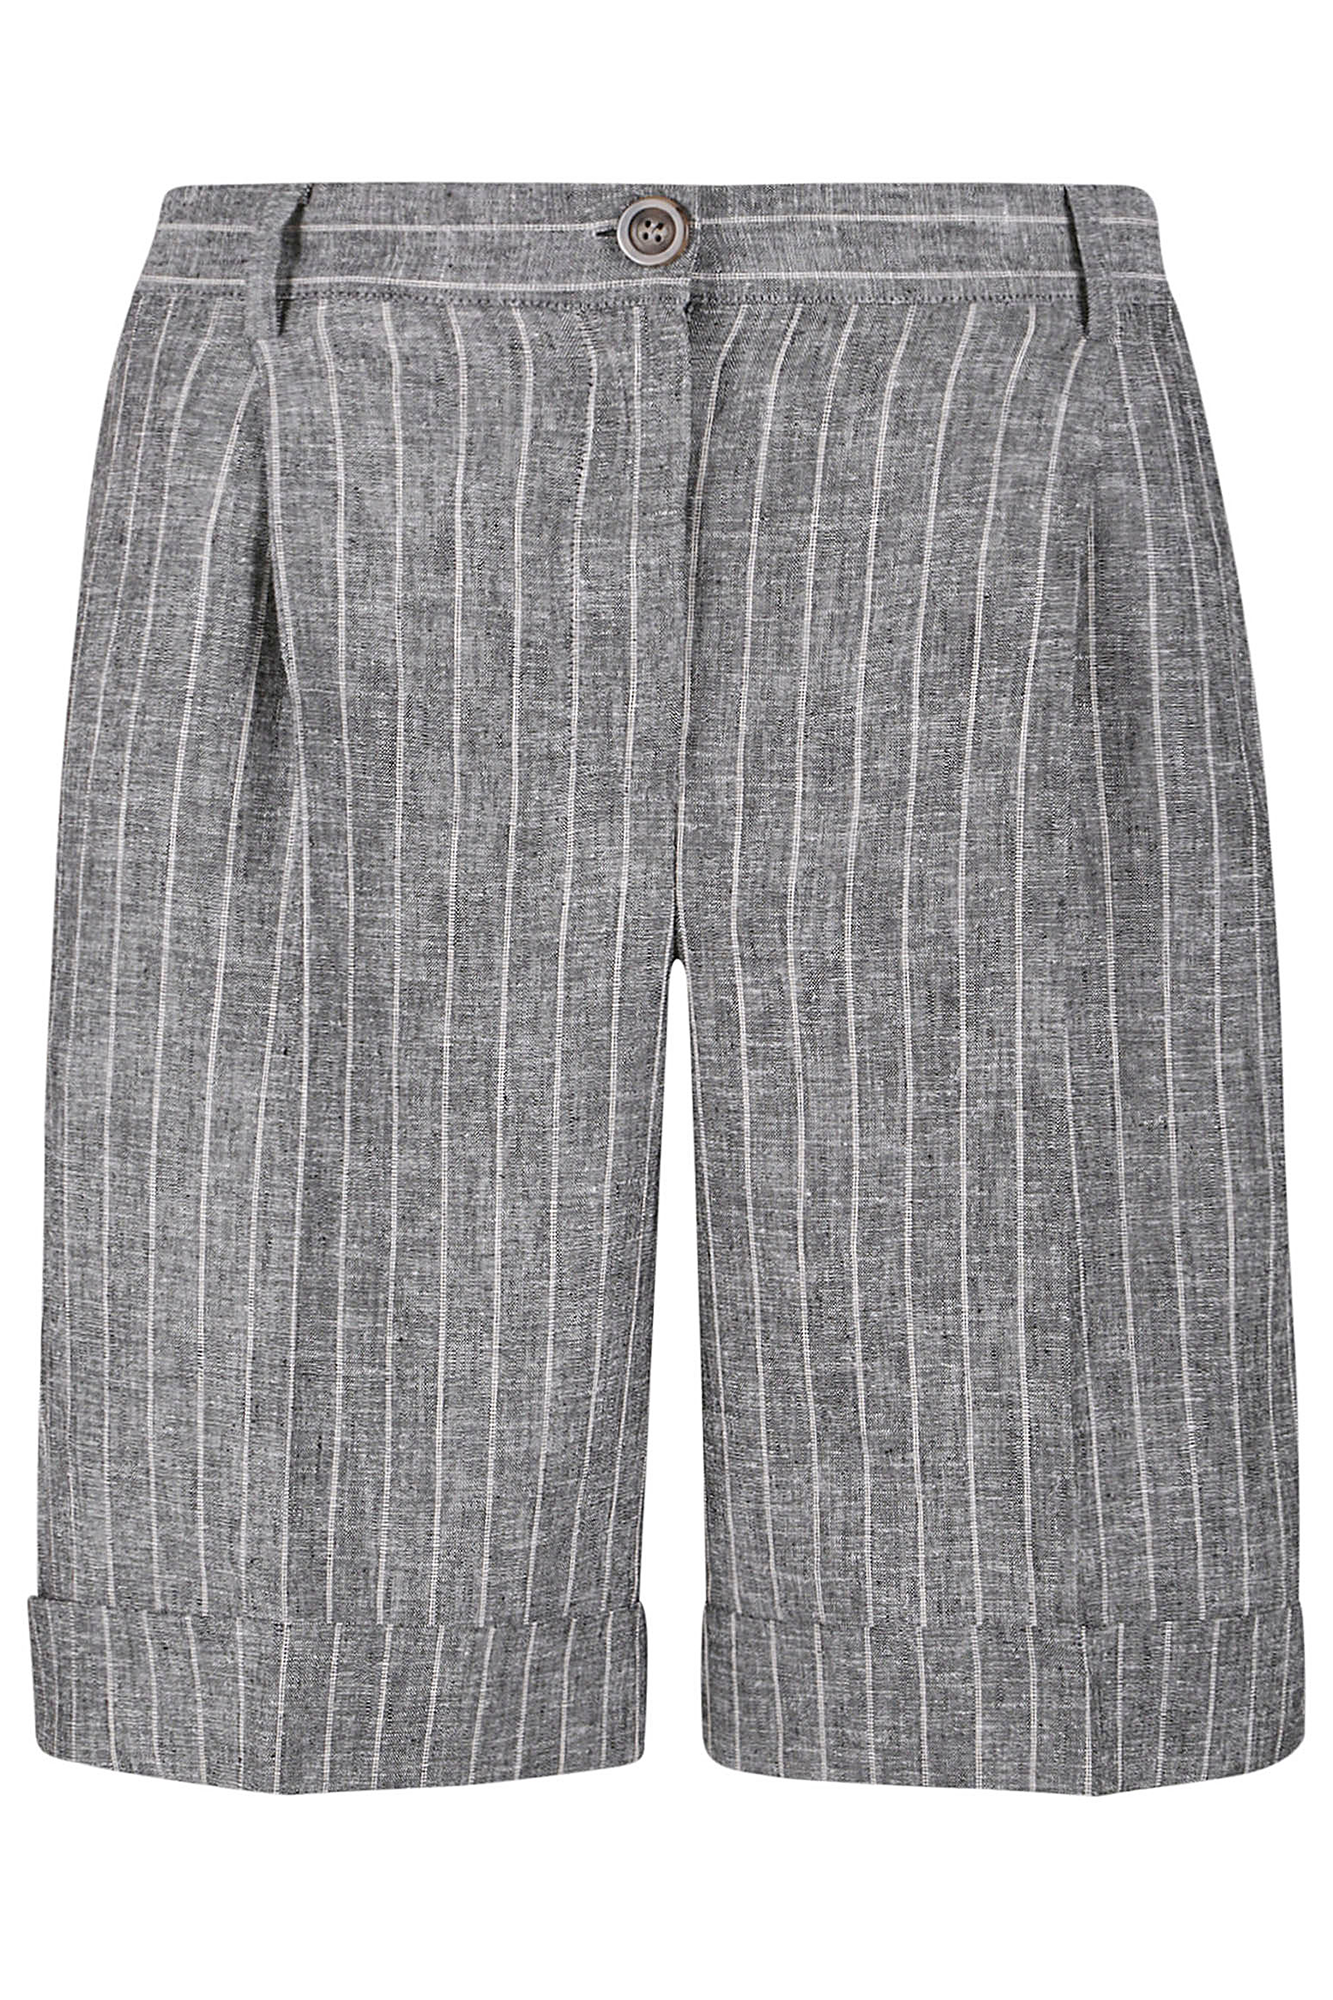 PT Shorts Pinstripe Grey/White